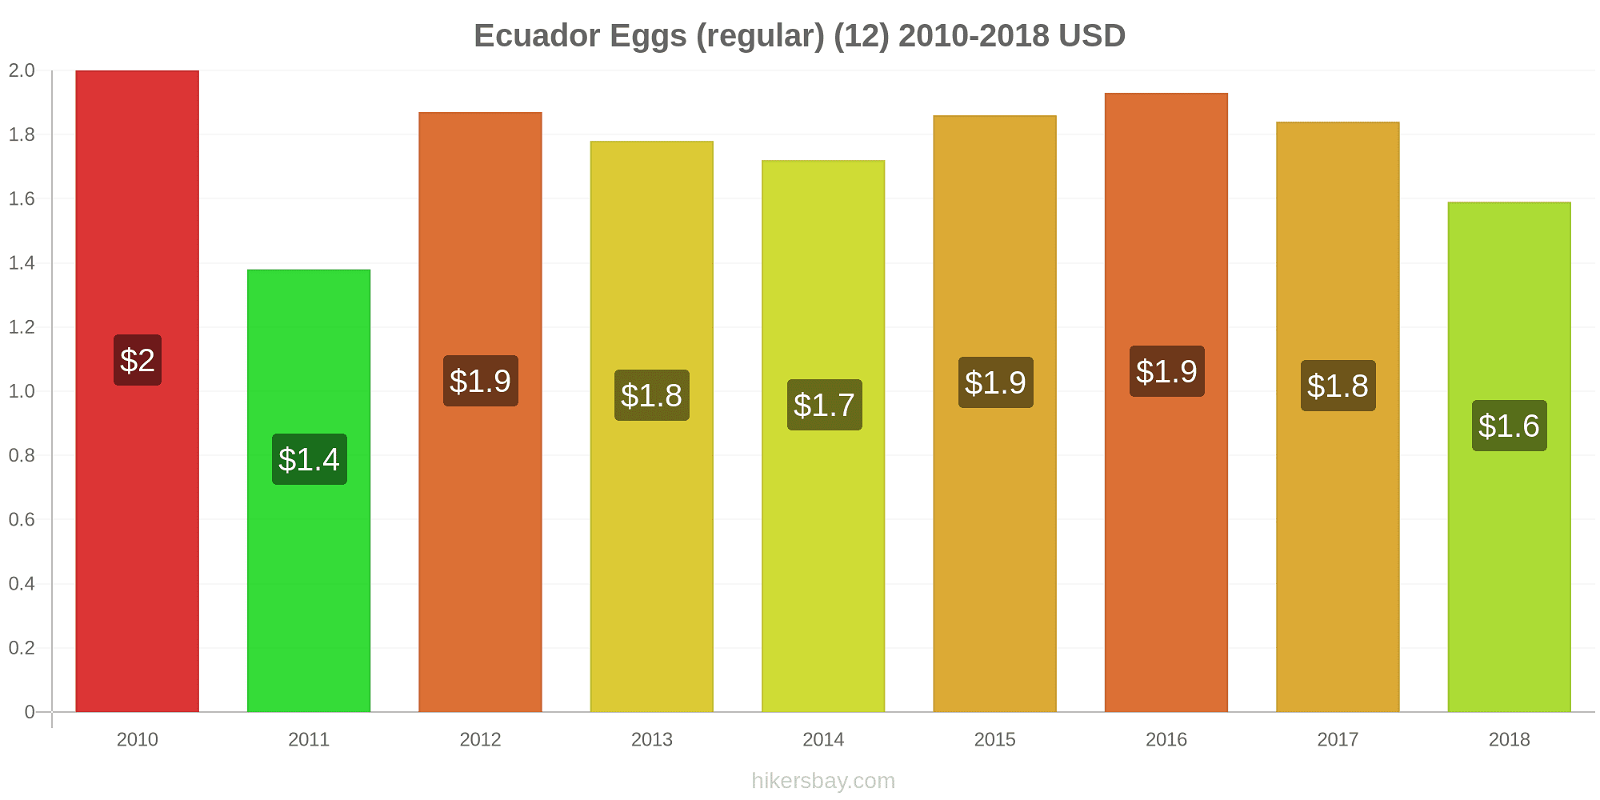 Ecuador price changes Eggs (regular) (12) hikersbay.com